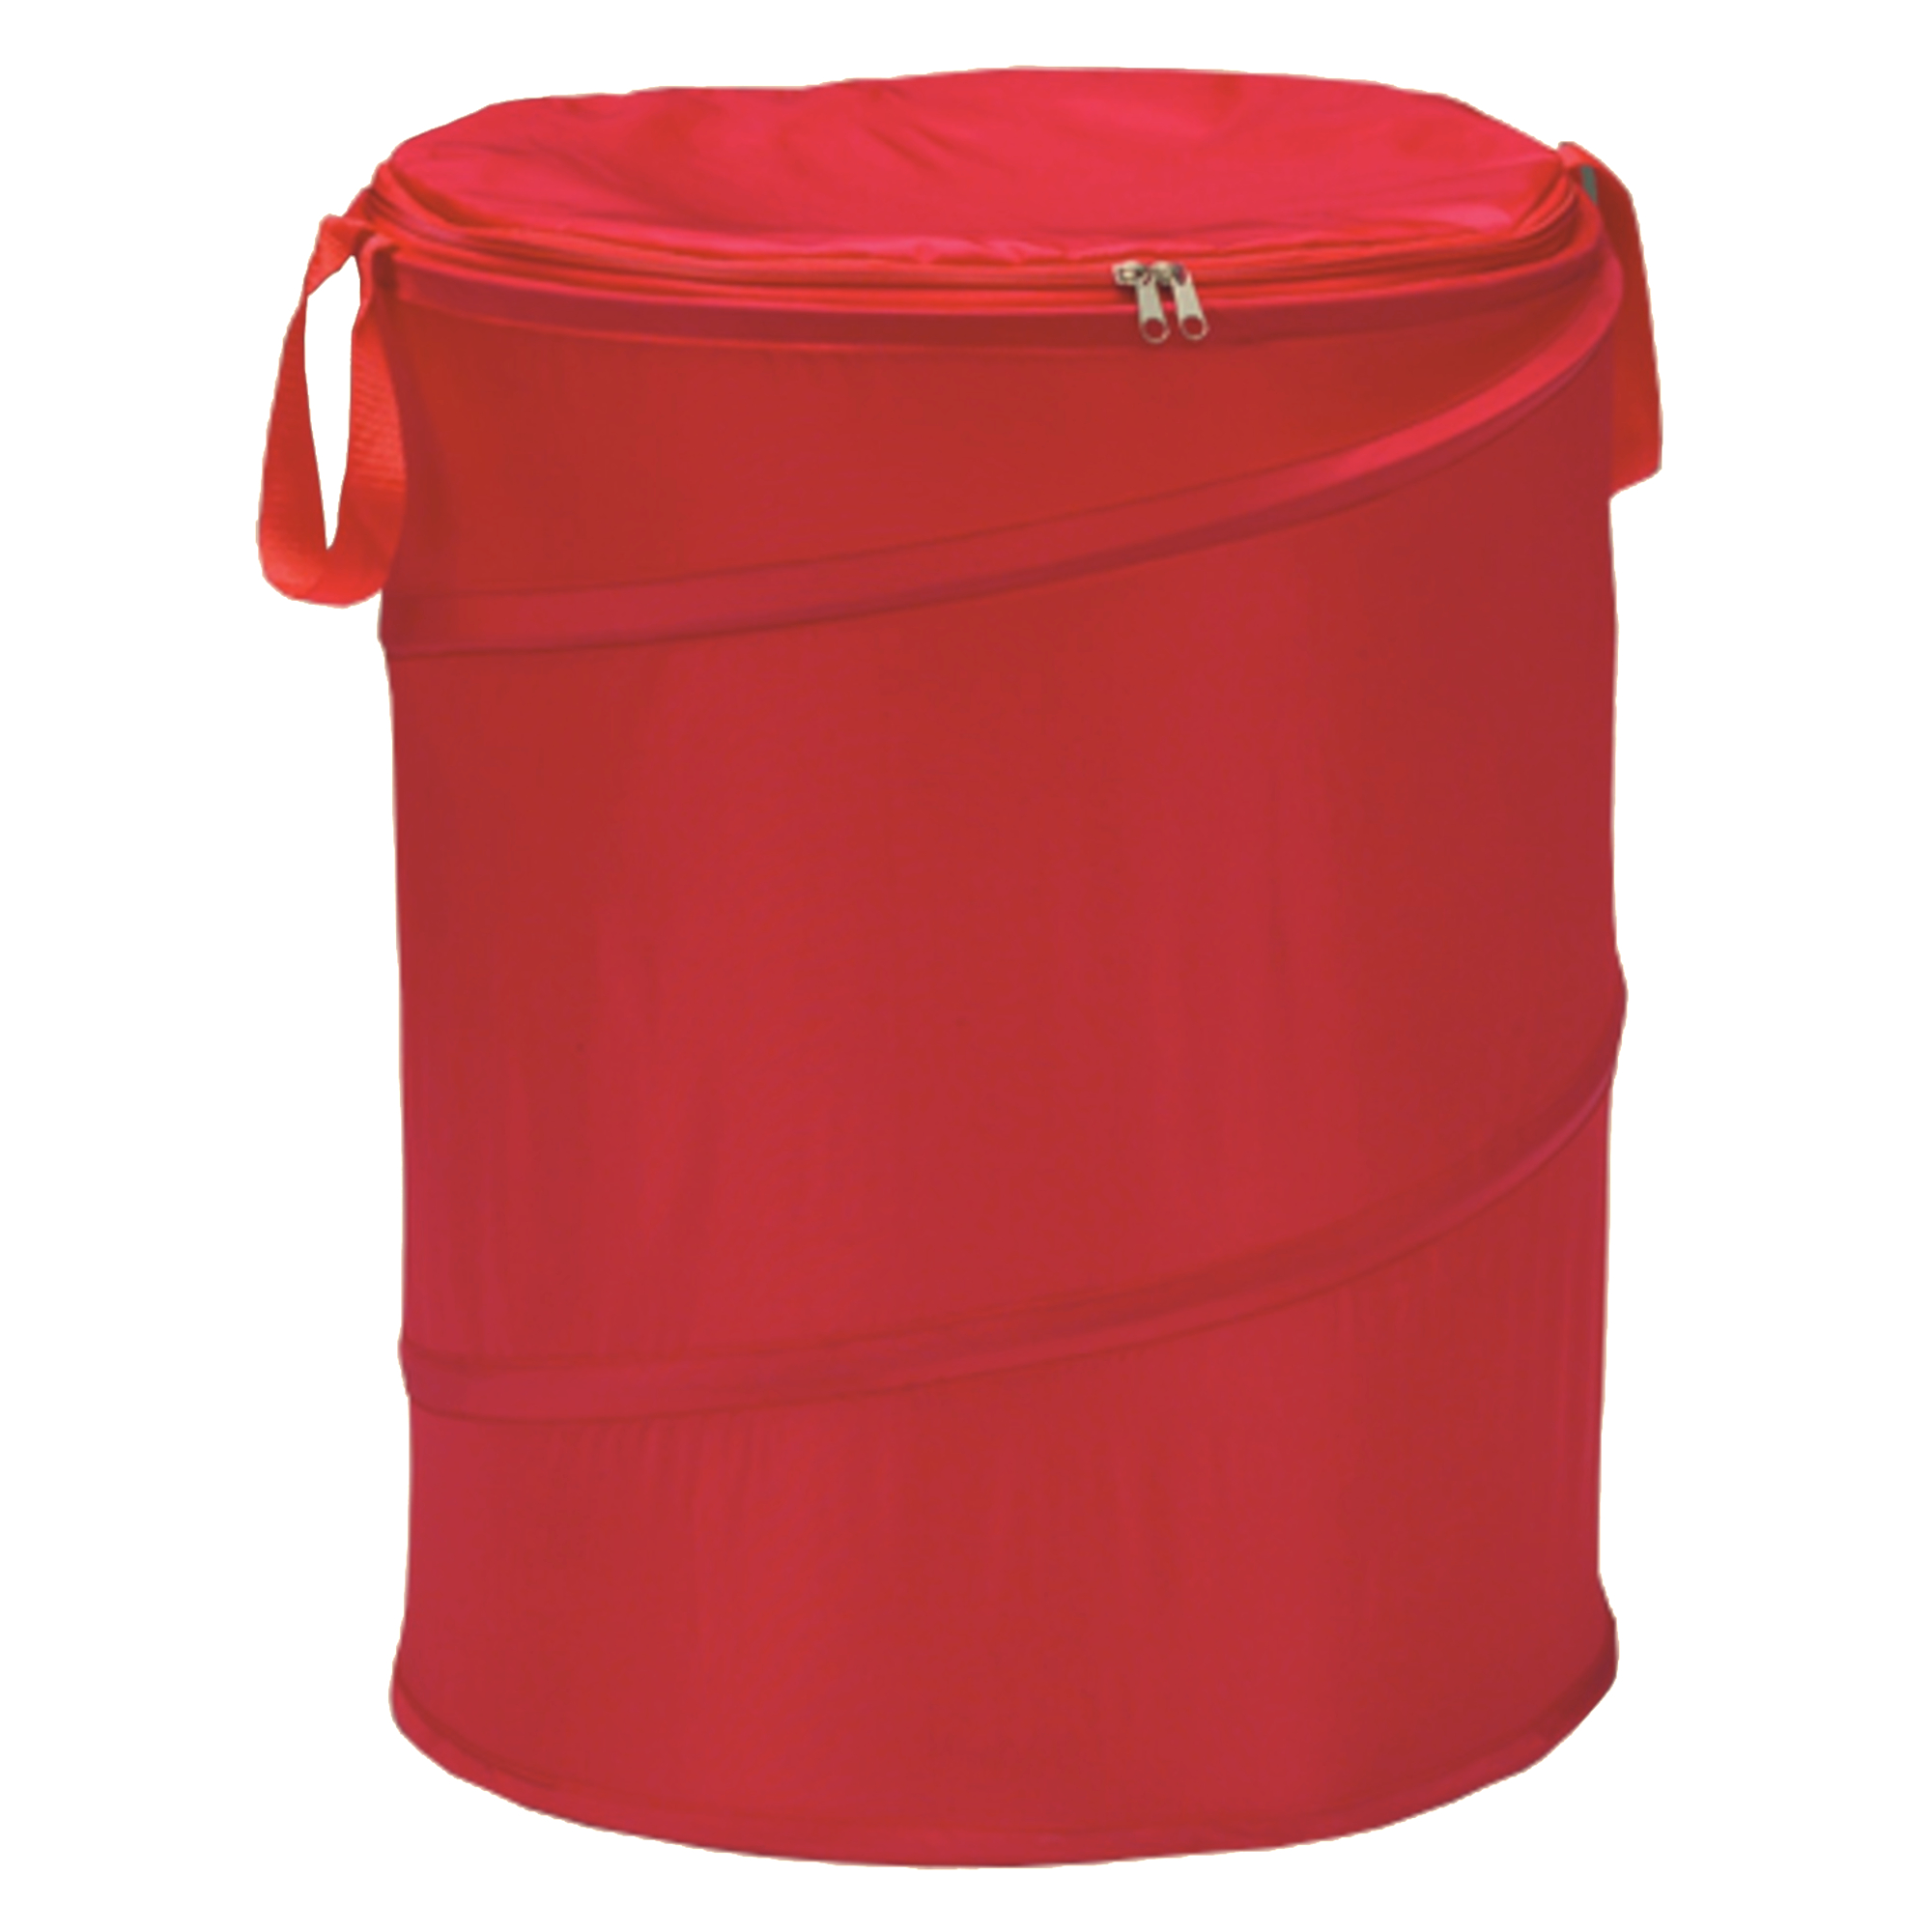 The Original Bongo Bag Pop-Up Hamper, Red - image 1 of 4